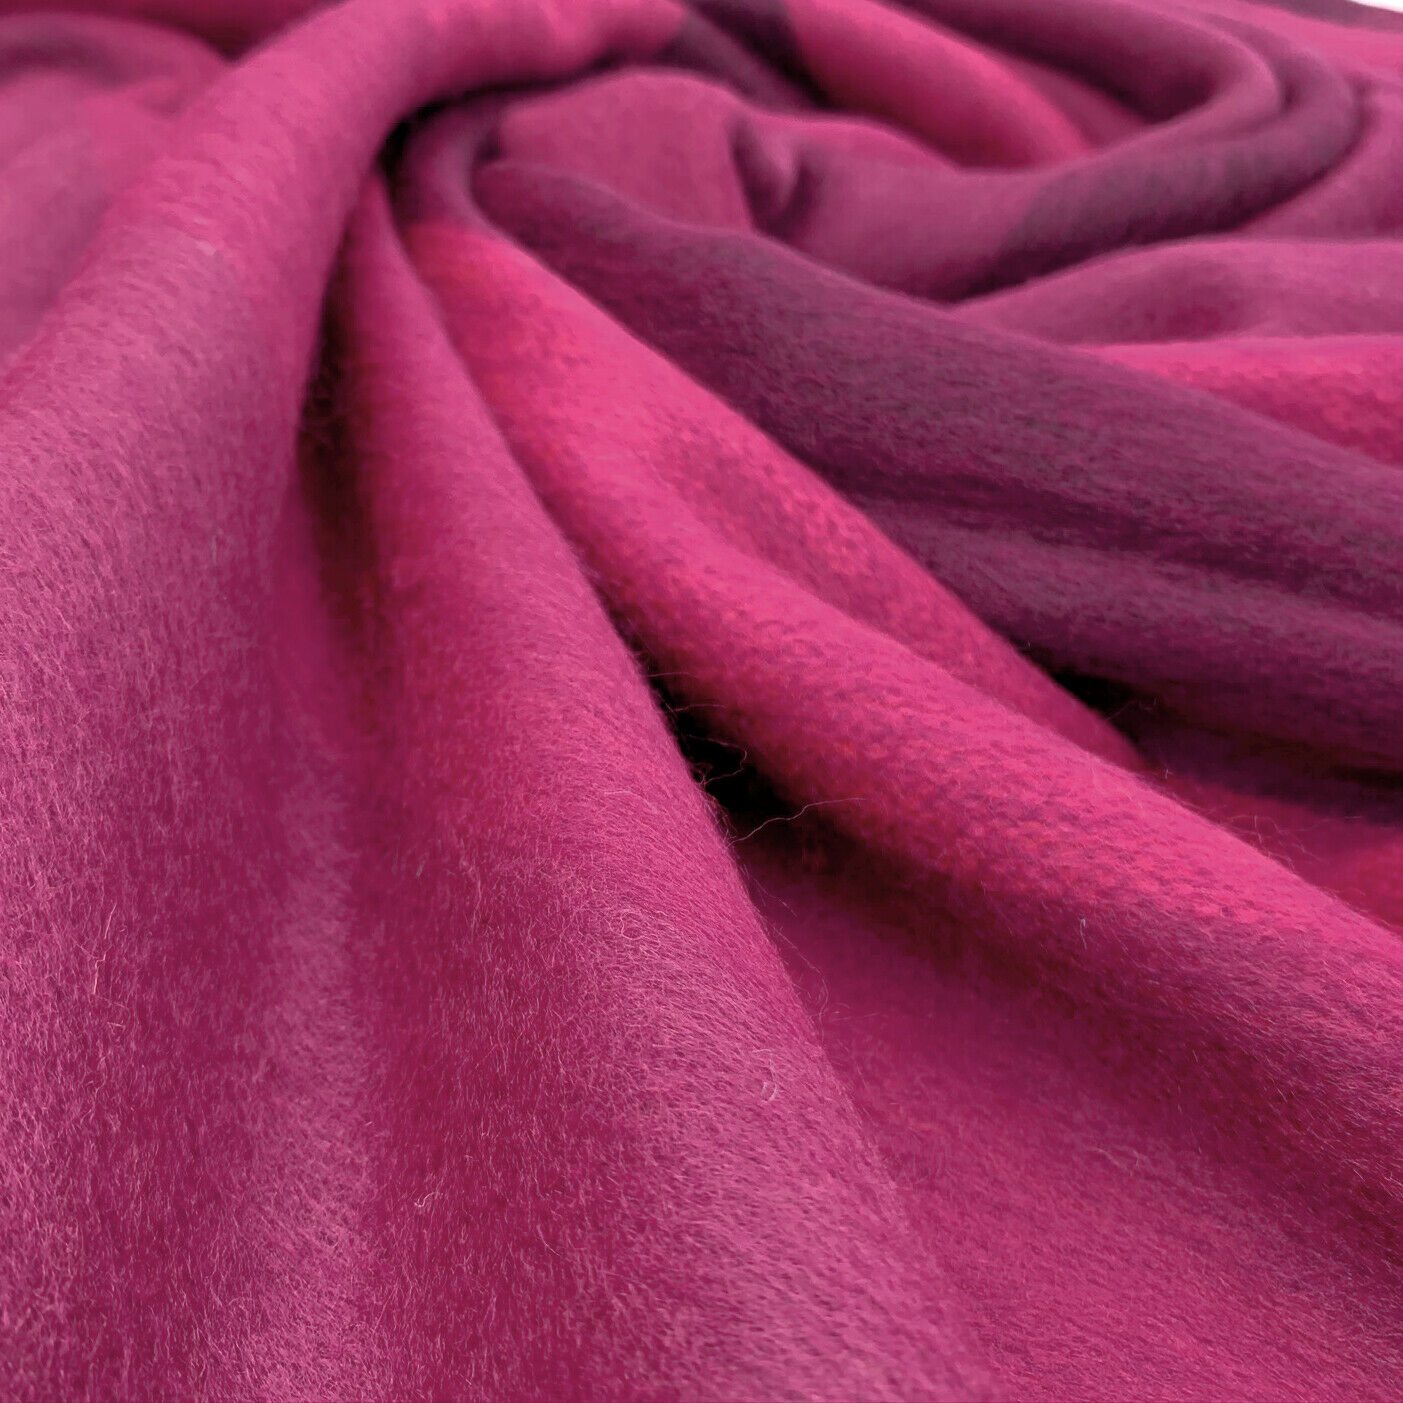 Chontamarca - Baby Alpaca Wool Throw Blanket / Sofa Cover - Queen - Thick Stripes Pattern Fuchsia/Pink